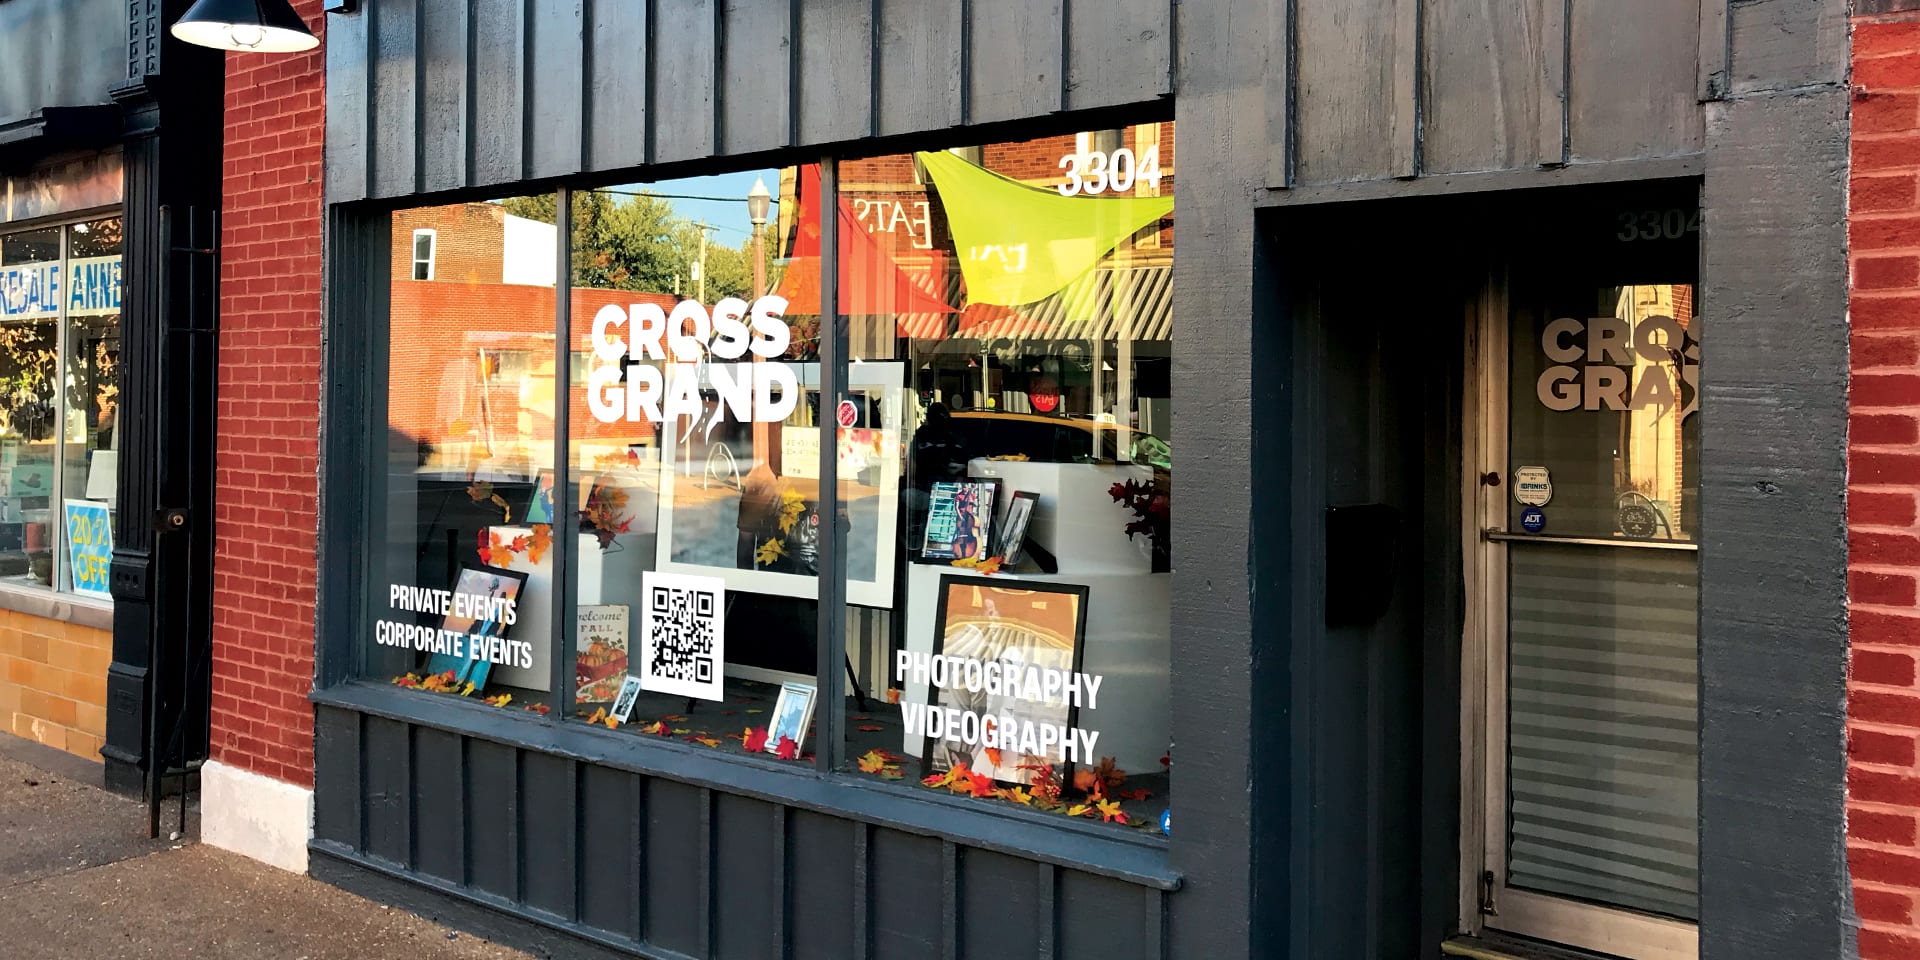 The studio of Cross Grand, 3304 Meramec Street in Downtown Dutchtown.